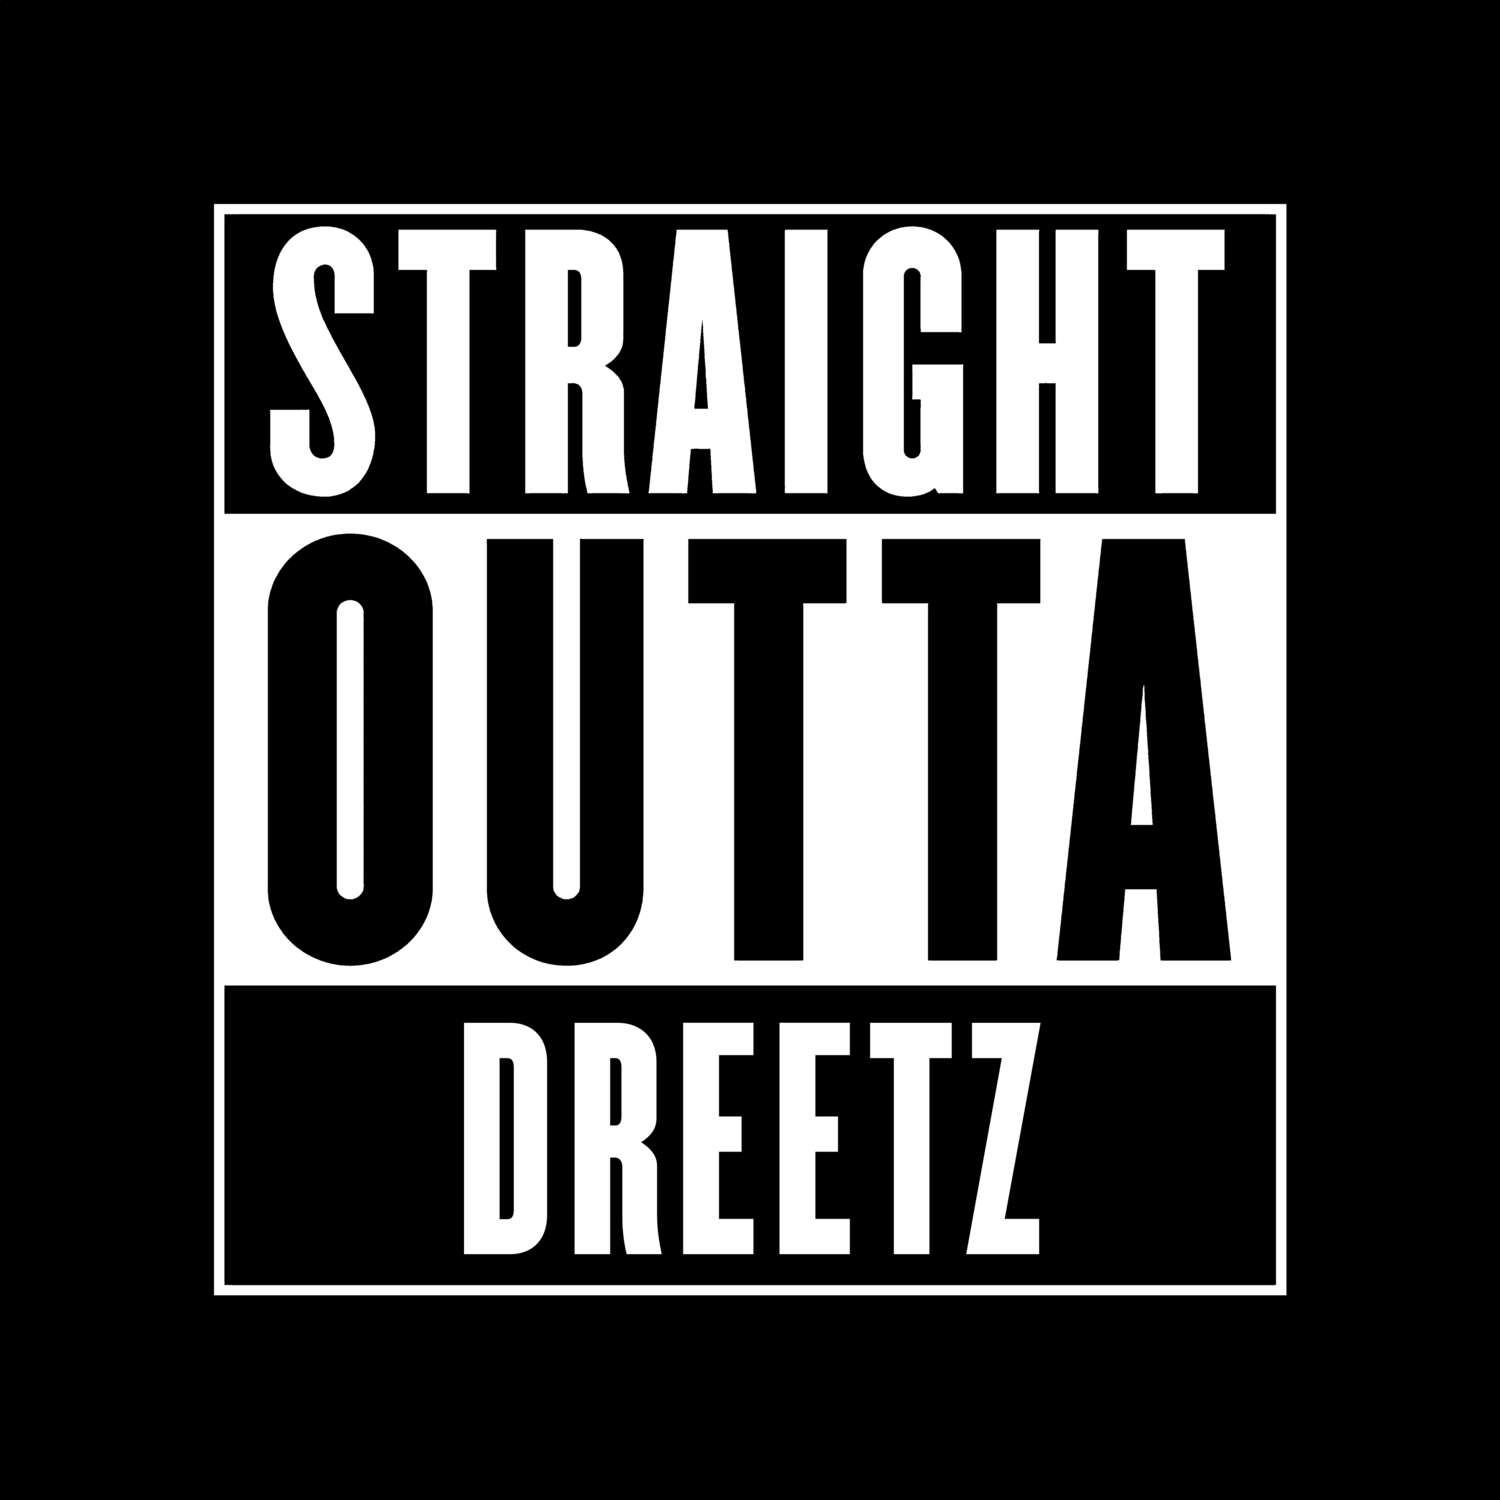 Dreetz T-Shirt »Straight Outta«